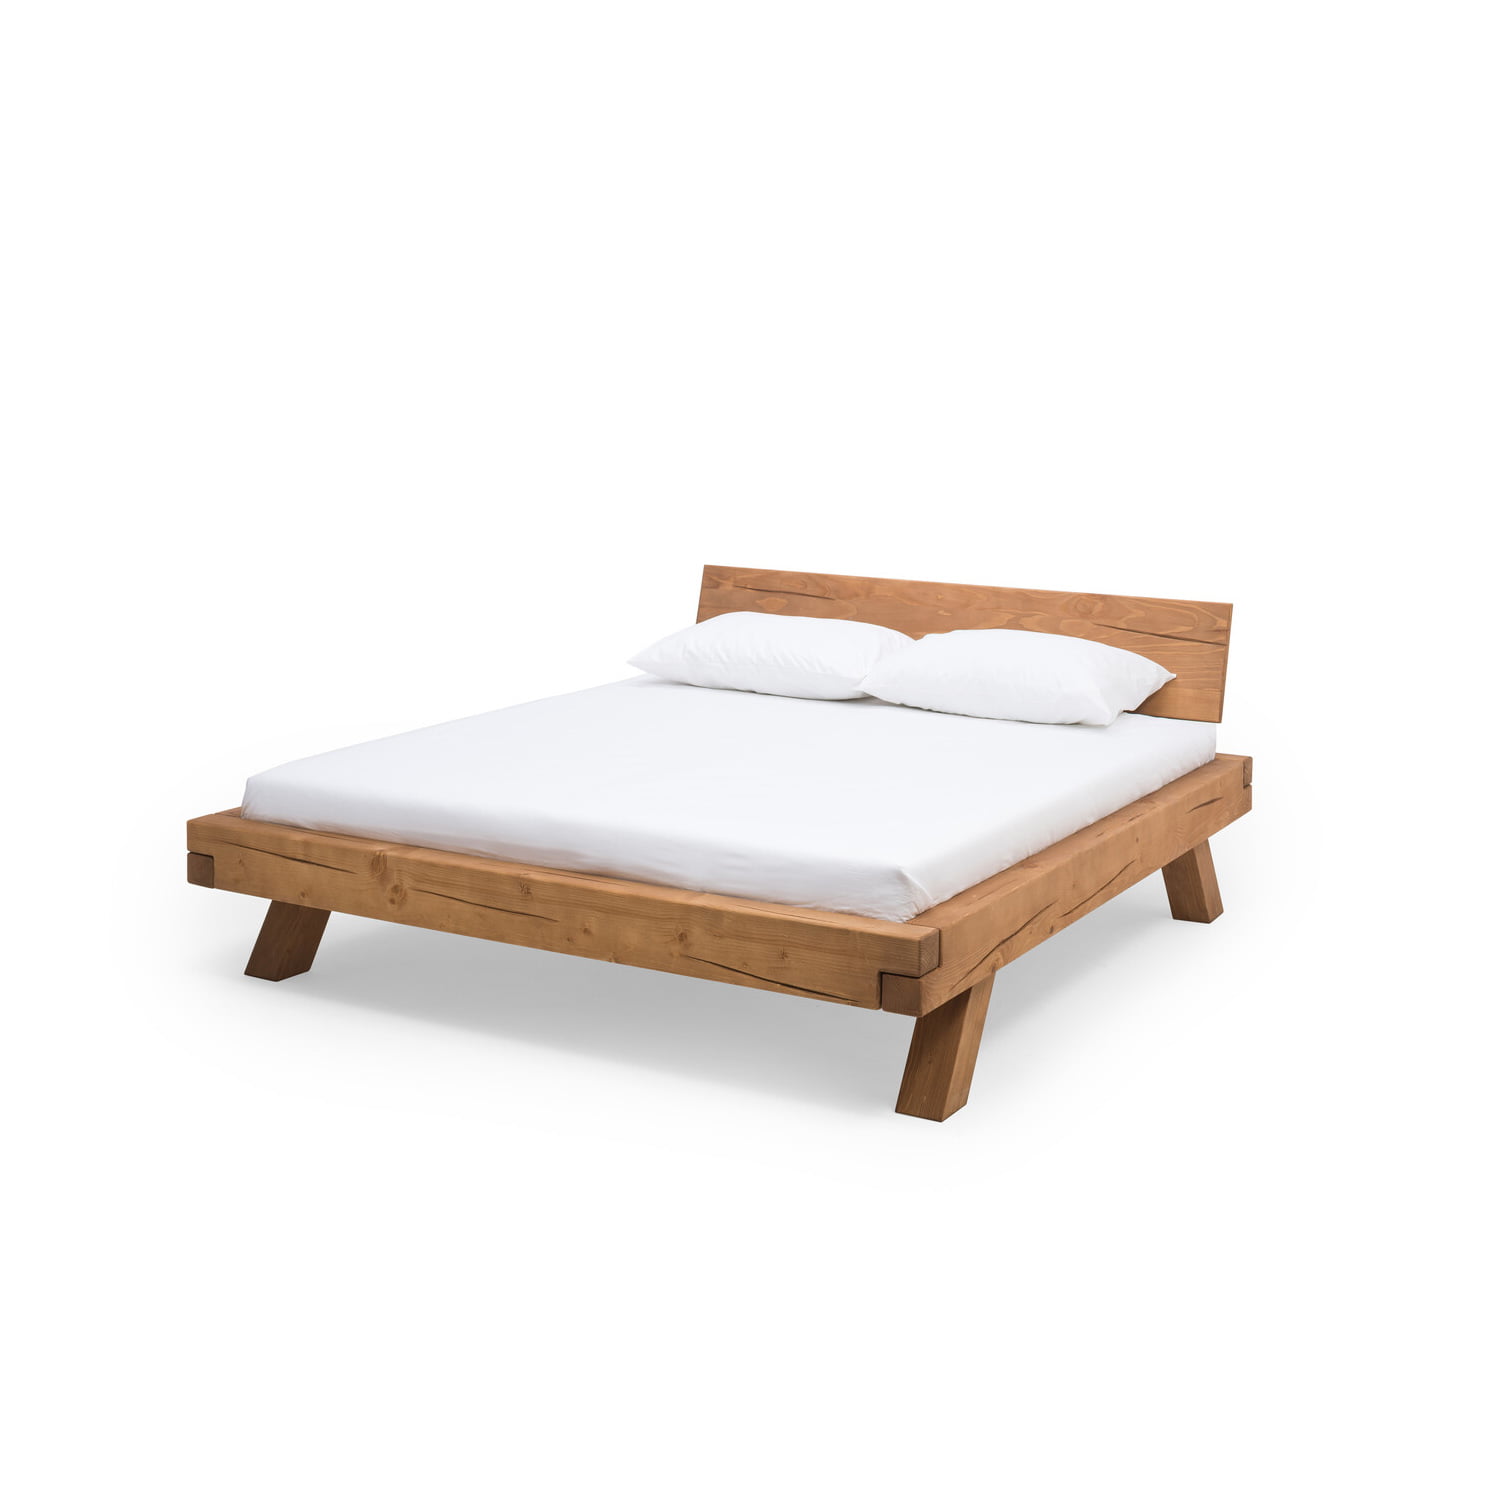 Bed Romeo Vurenhout 160x200cm